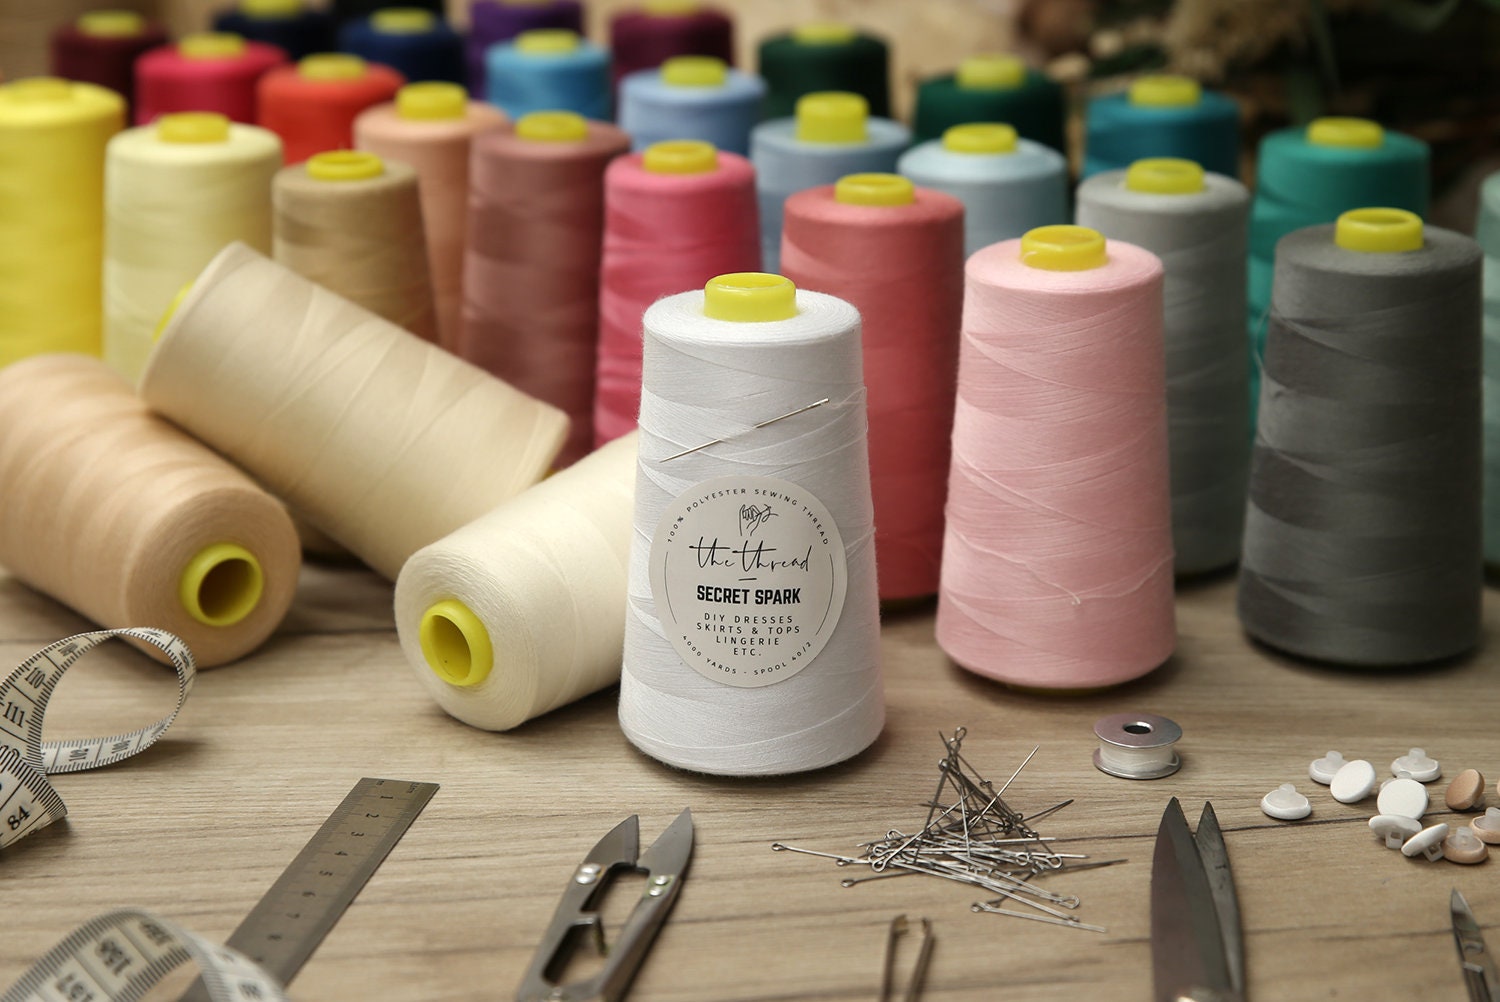 Polyester Serger Thread - Neon Yellow 823 - 2750 Yards